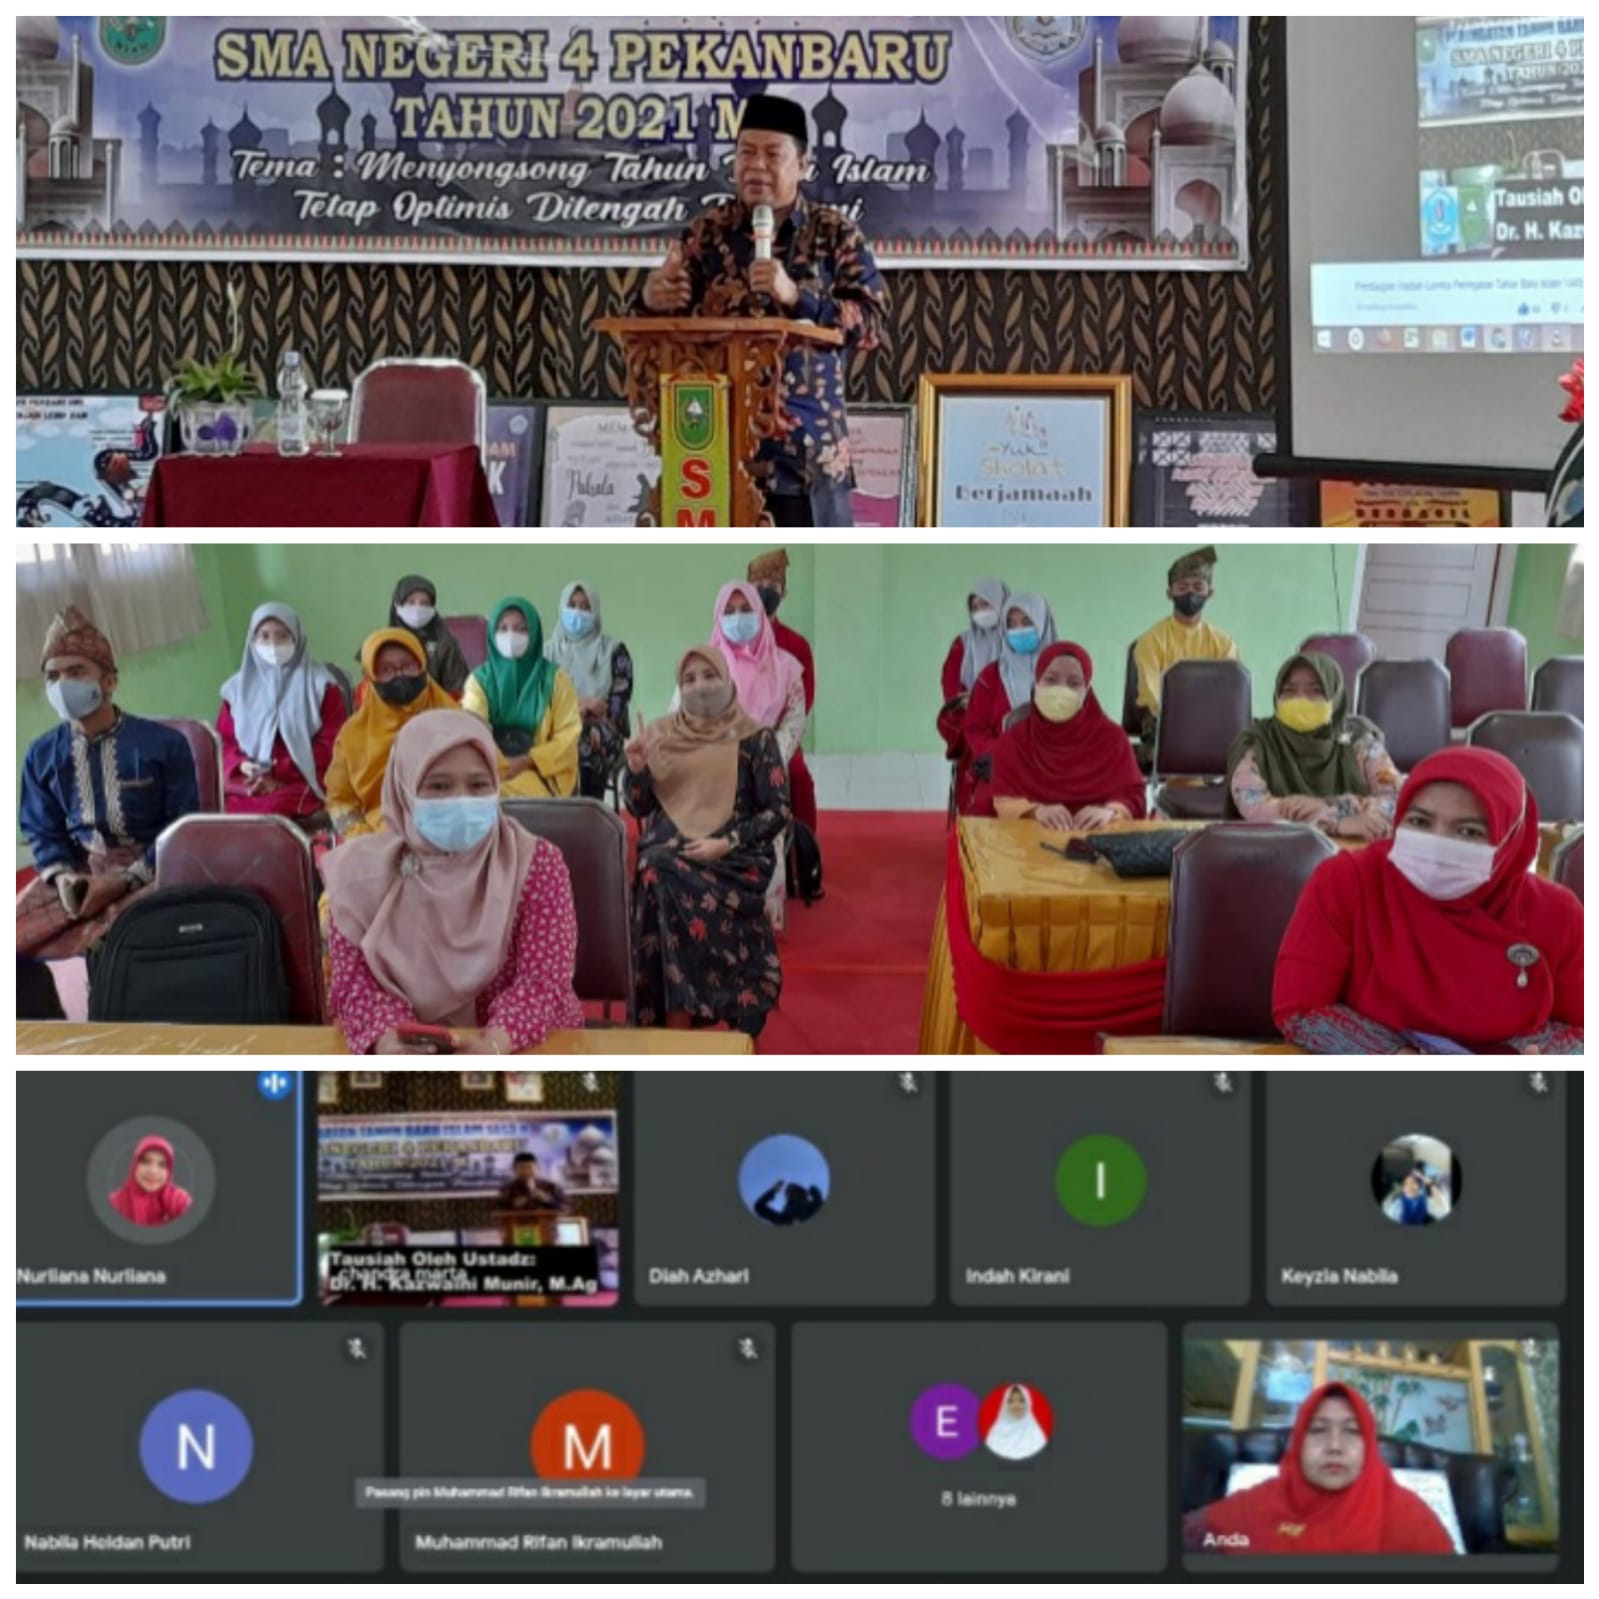 SMAN 4 Pekanbaru Sampaikan Tausiah Tahun Baru Islam 1443 H Secara Virtual